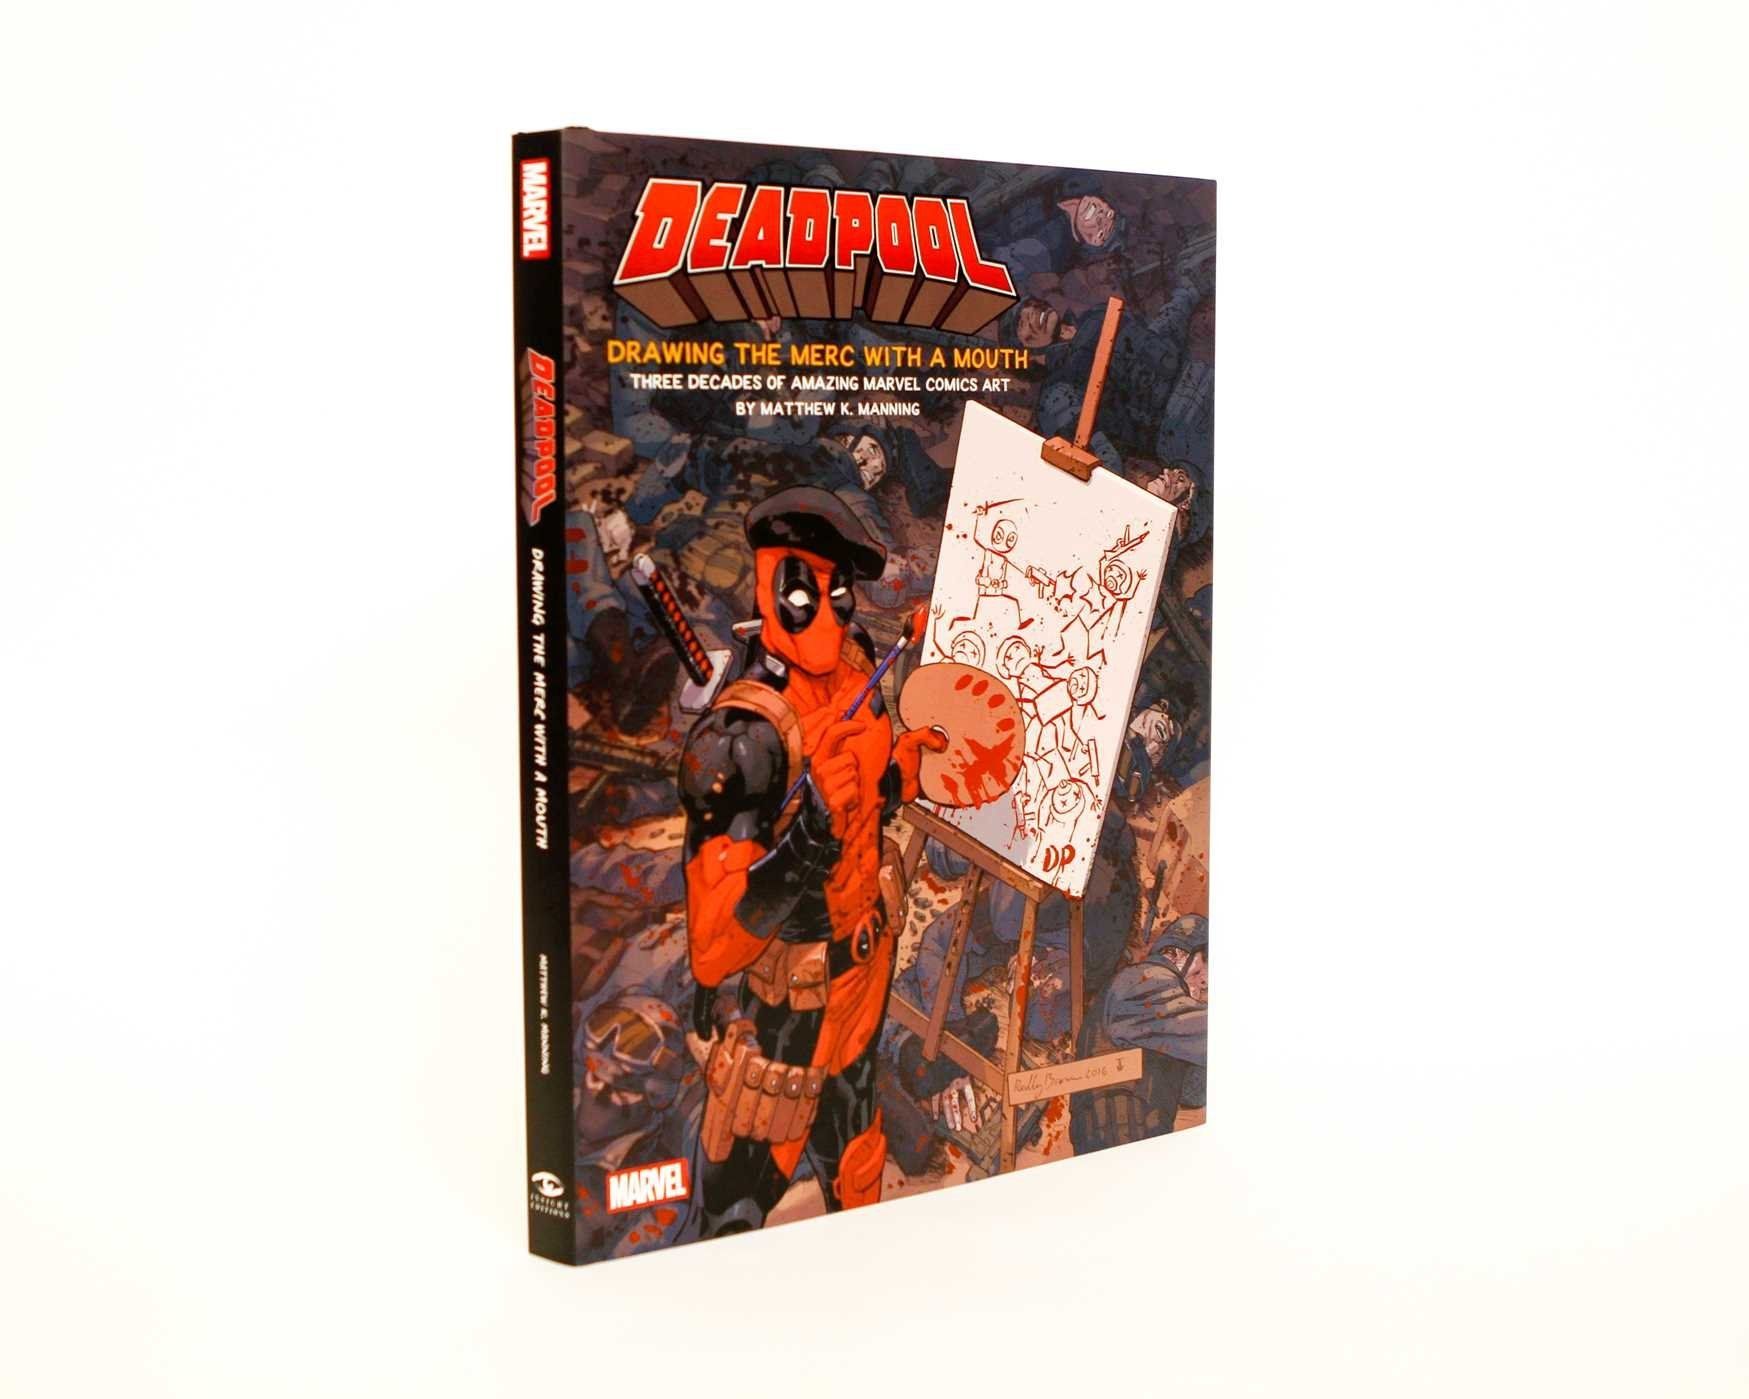  The Art of Deadpool_Matthew K Manning_9781608879182_Insight Editions 